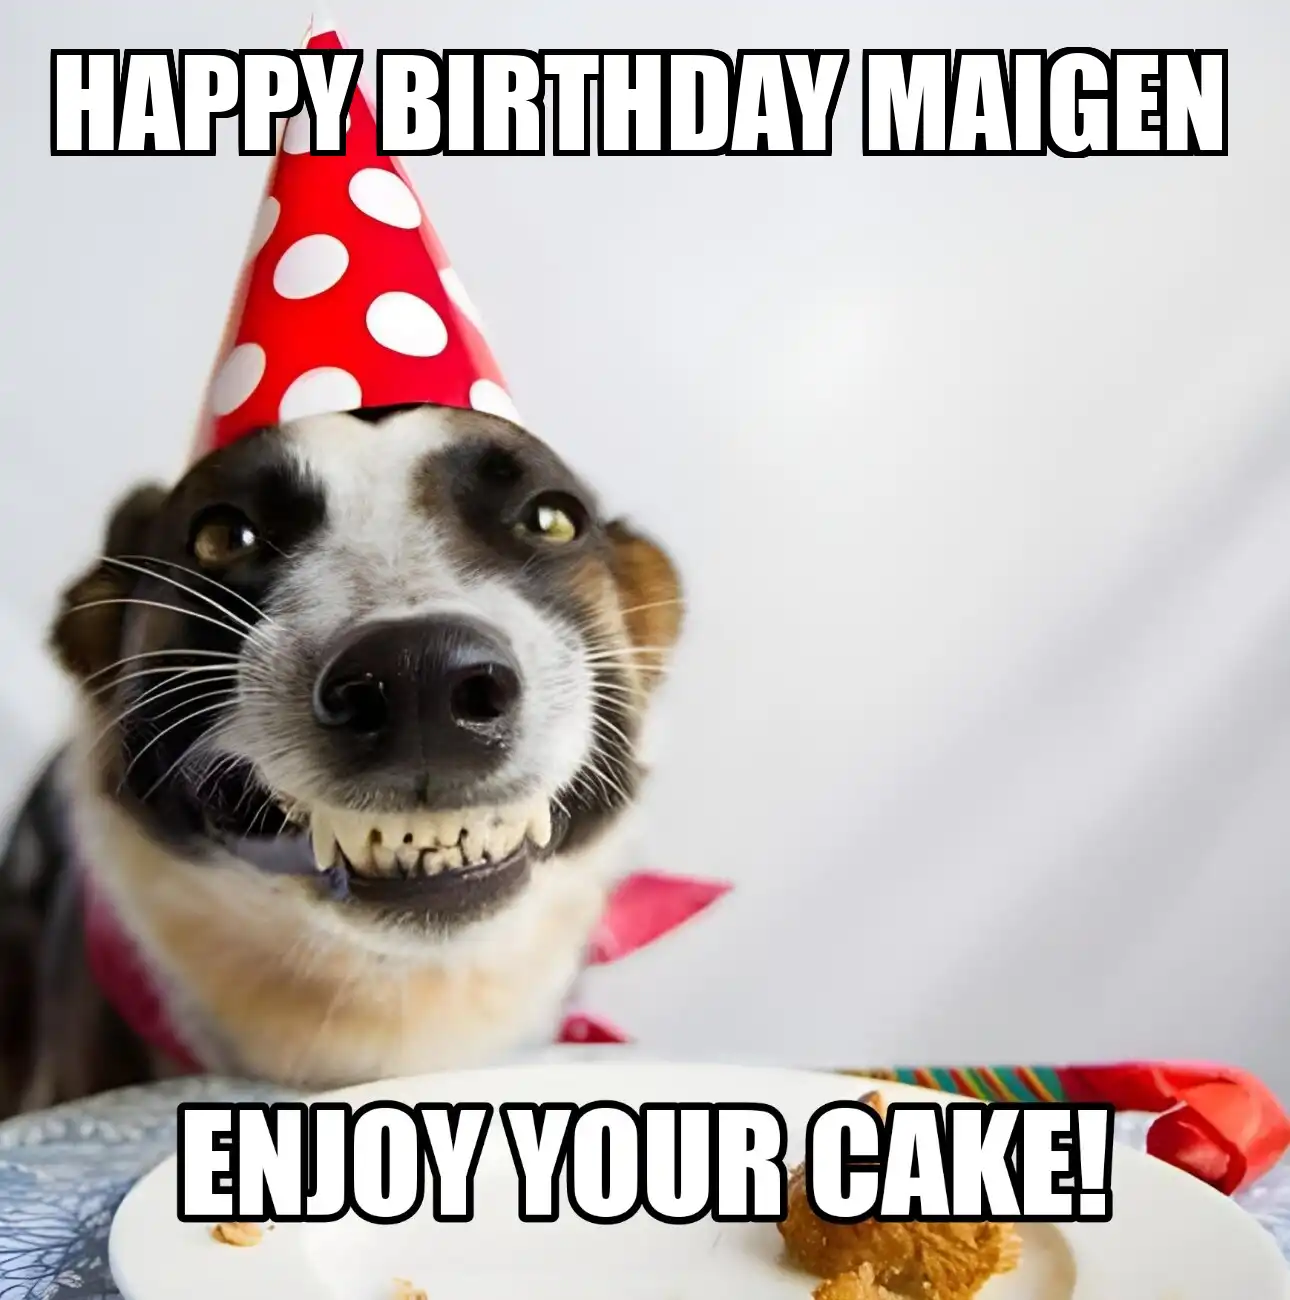 Happy Birthday Maigen Enjoy Your Cake Dog Meme